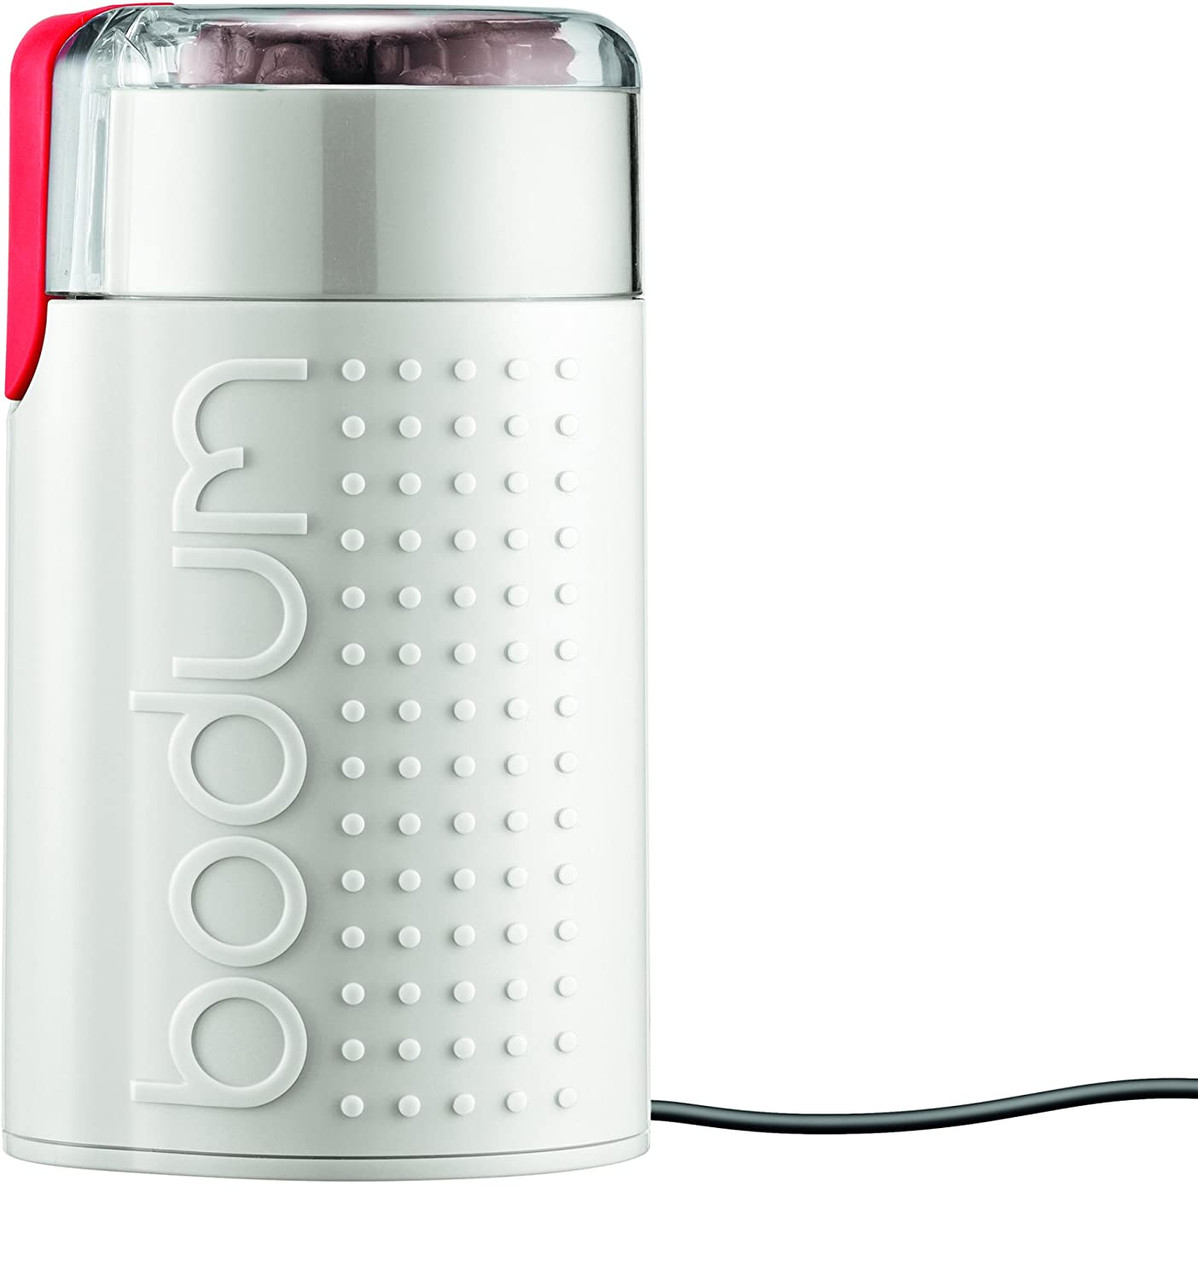 Bodum Bistro Electric Cordless Water Kettle